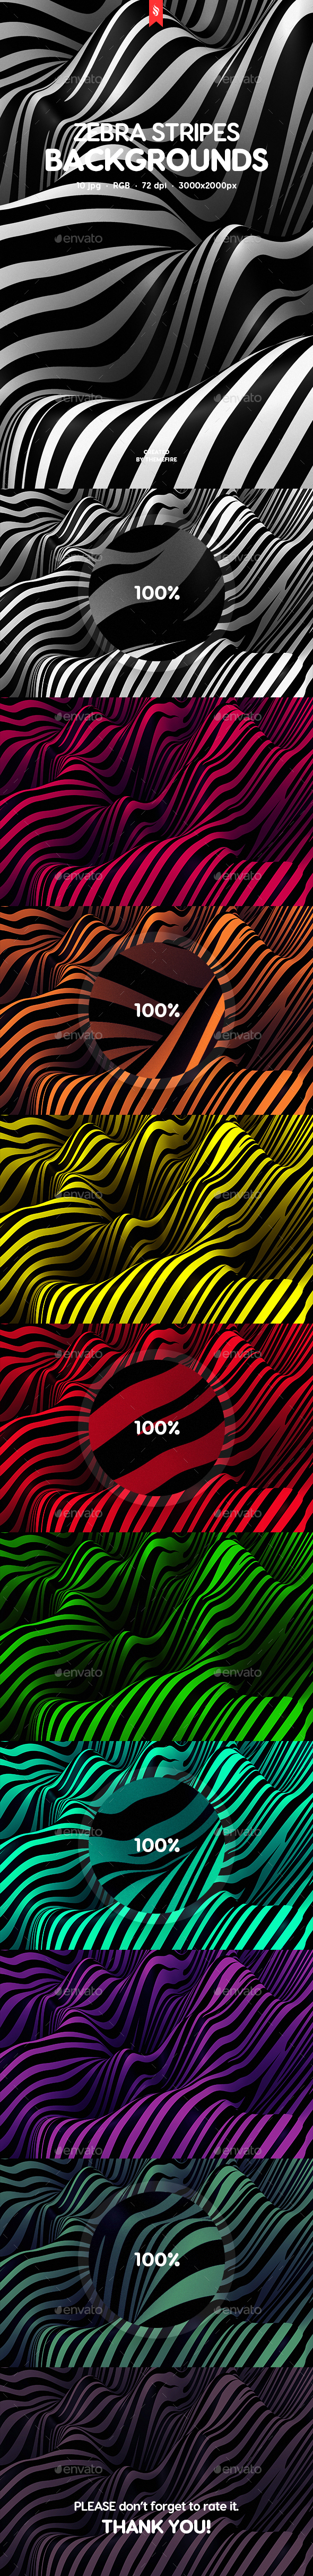 Zebra Stripes Texture Backgrounds